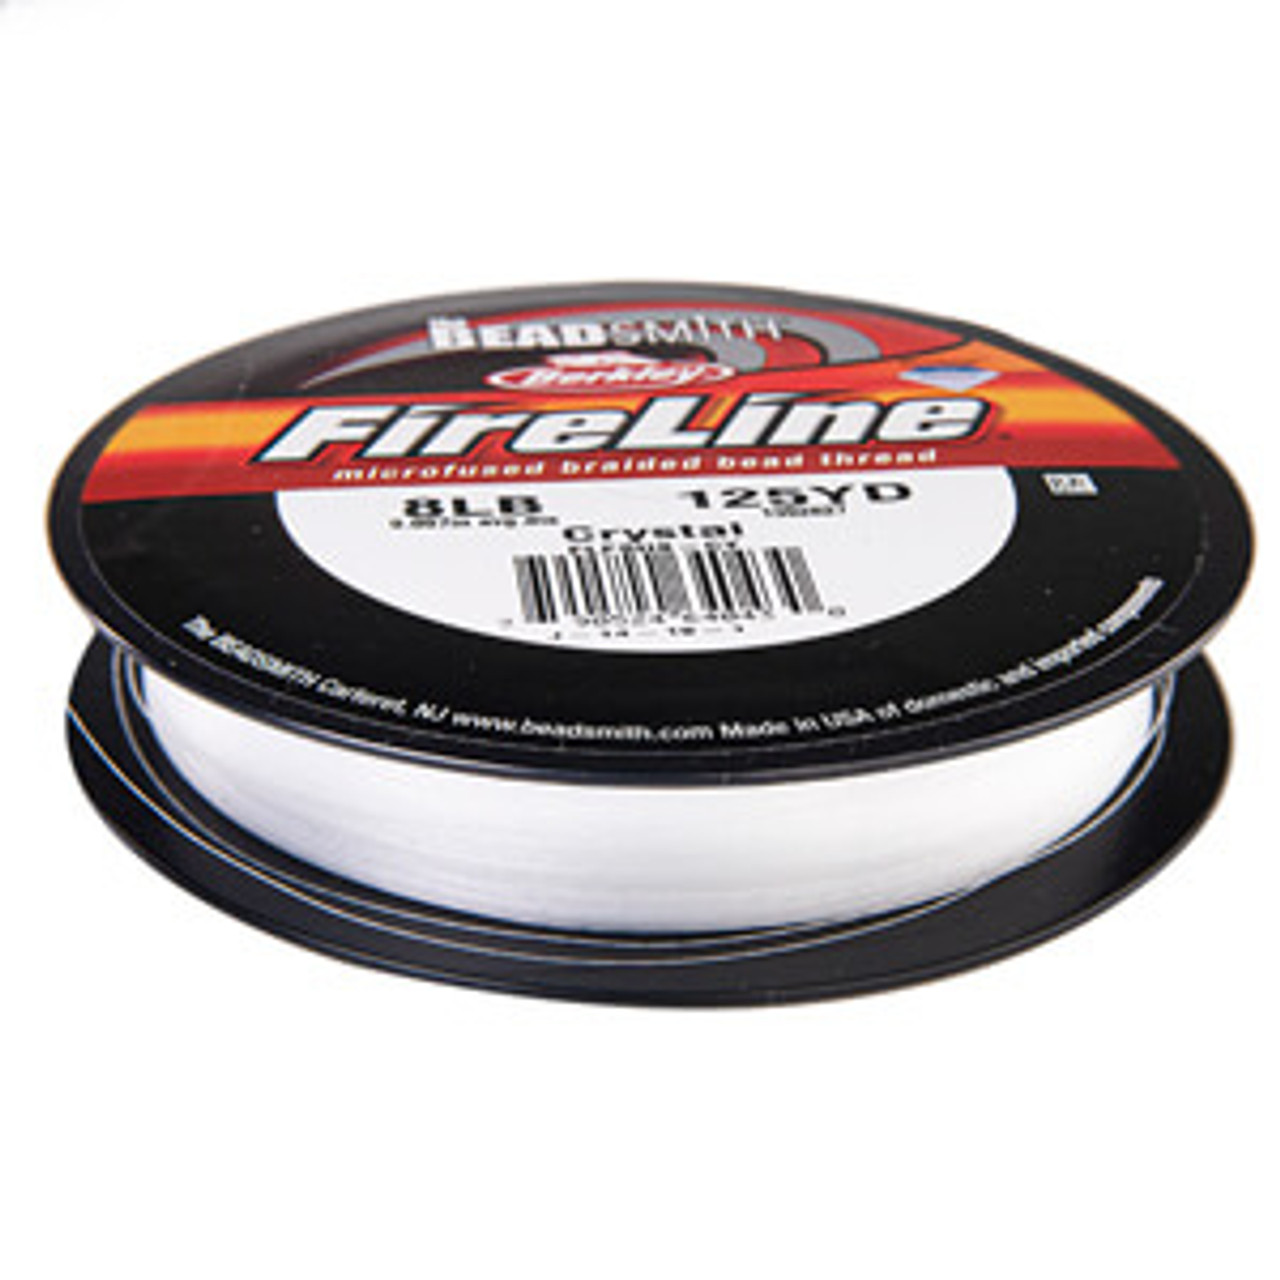 FireLine Beading Thread 8LB CRYSTAL CLEAR .007-125 Yards